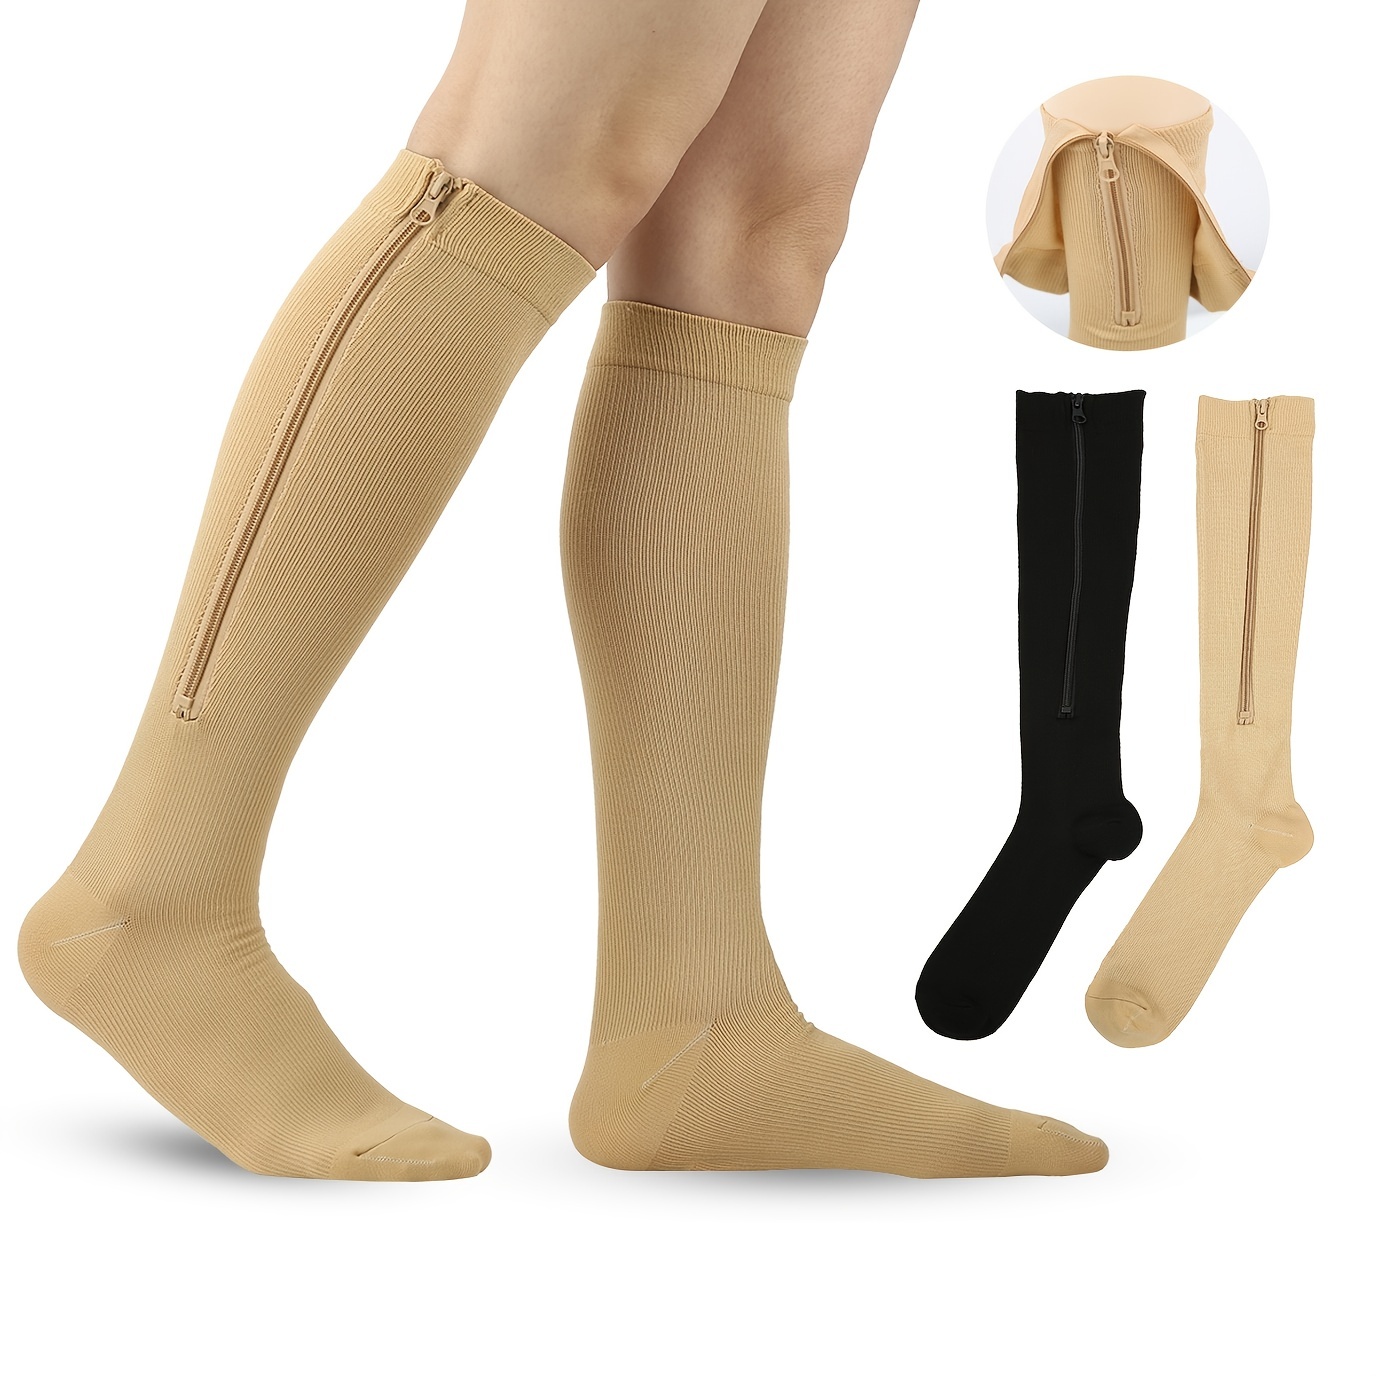 Zipper Open Toe Compression Socks Men Women calf Compression - Temu